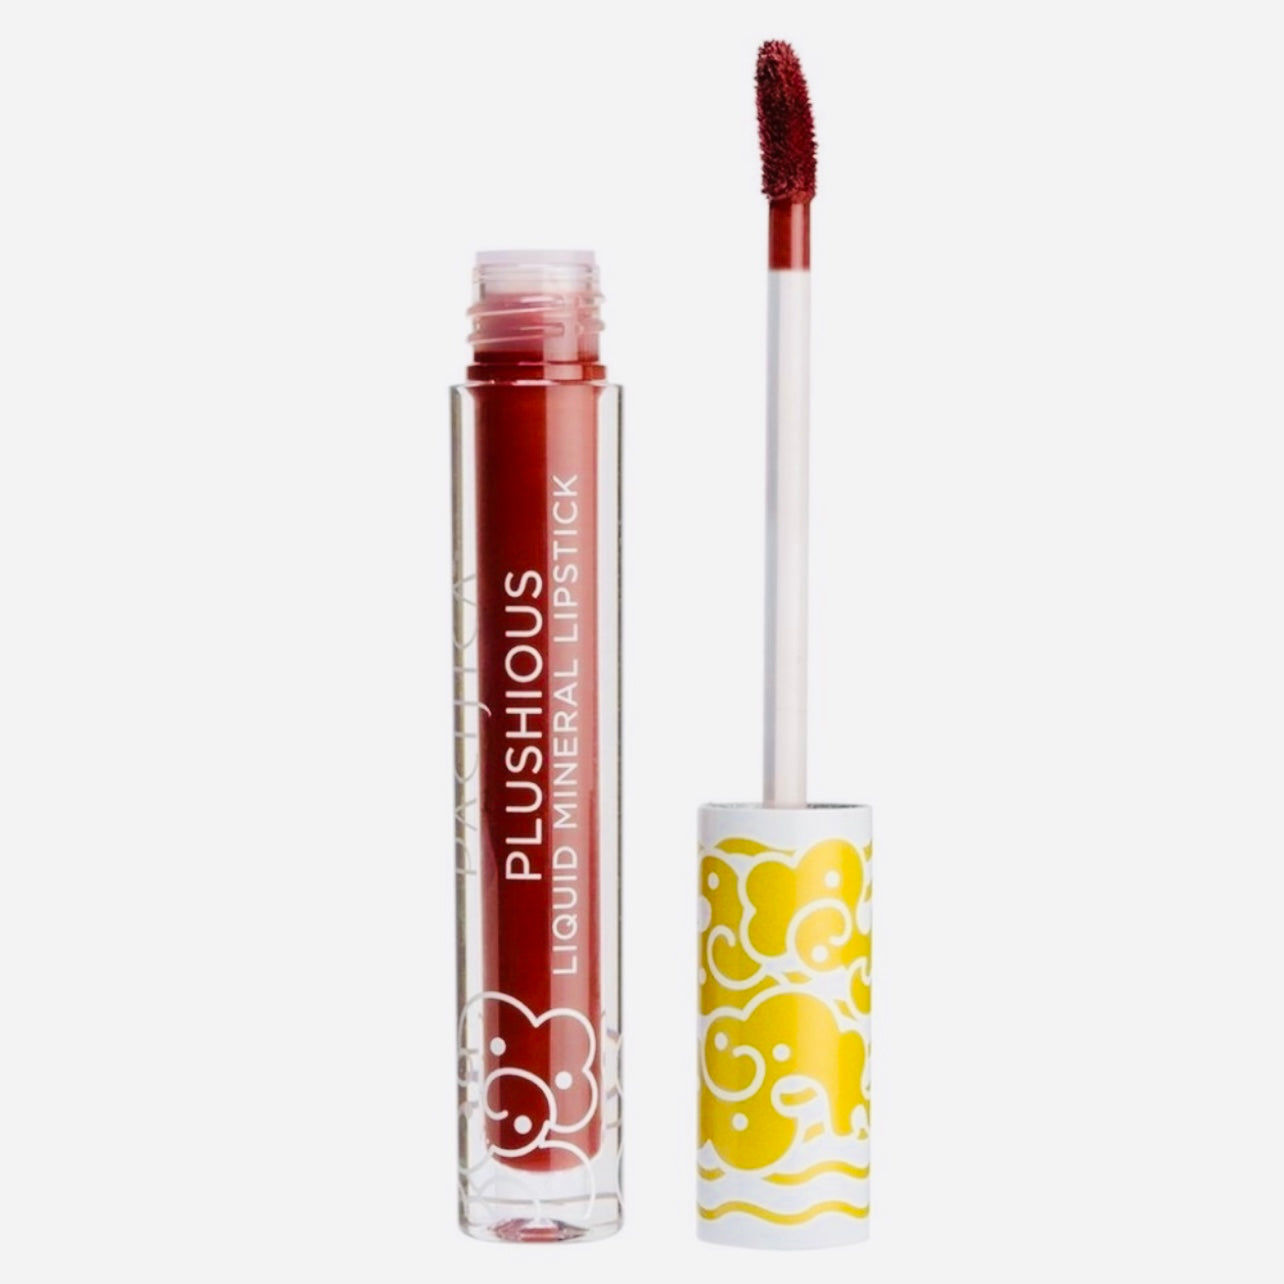 Pacifica Plushious Liquid Mineral Lipstick In “Bea” Full-size